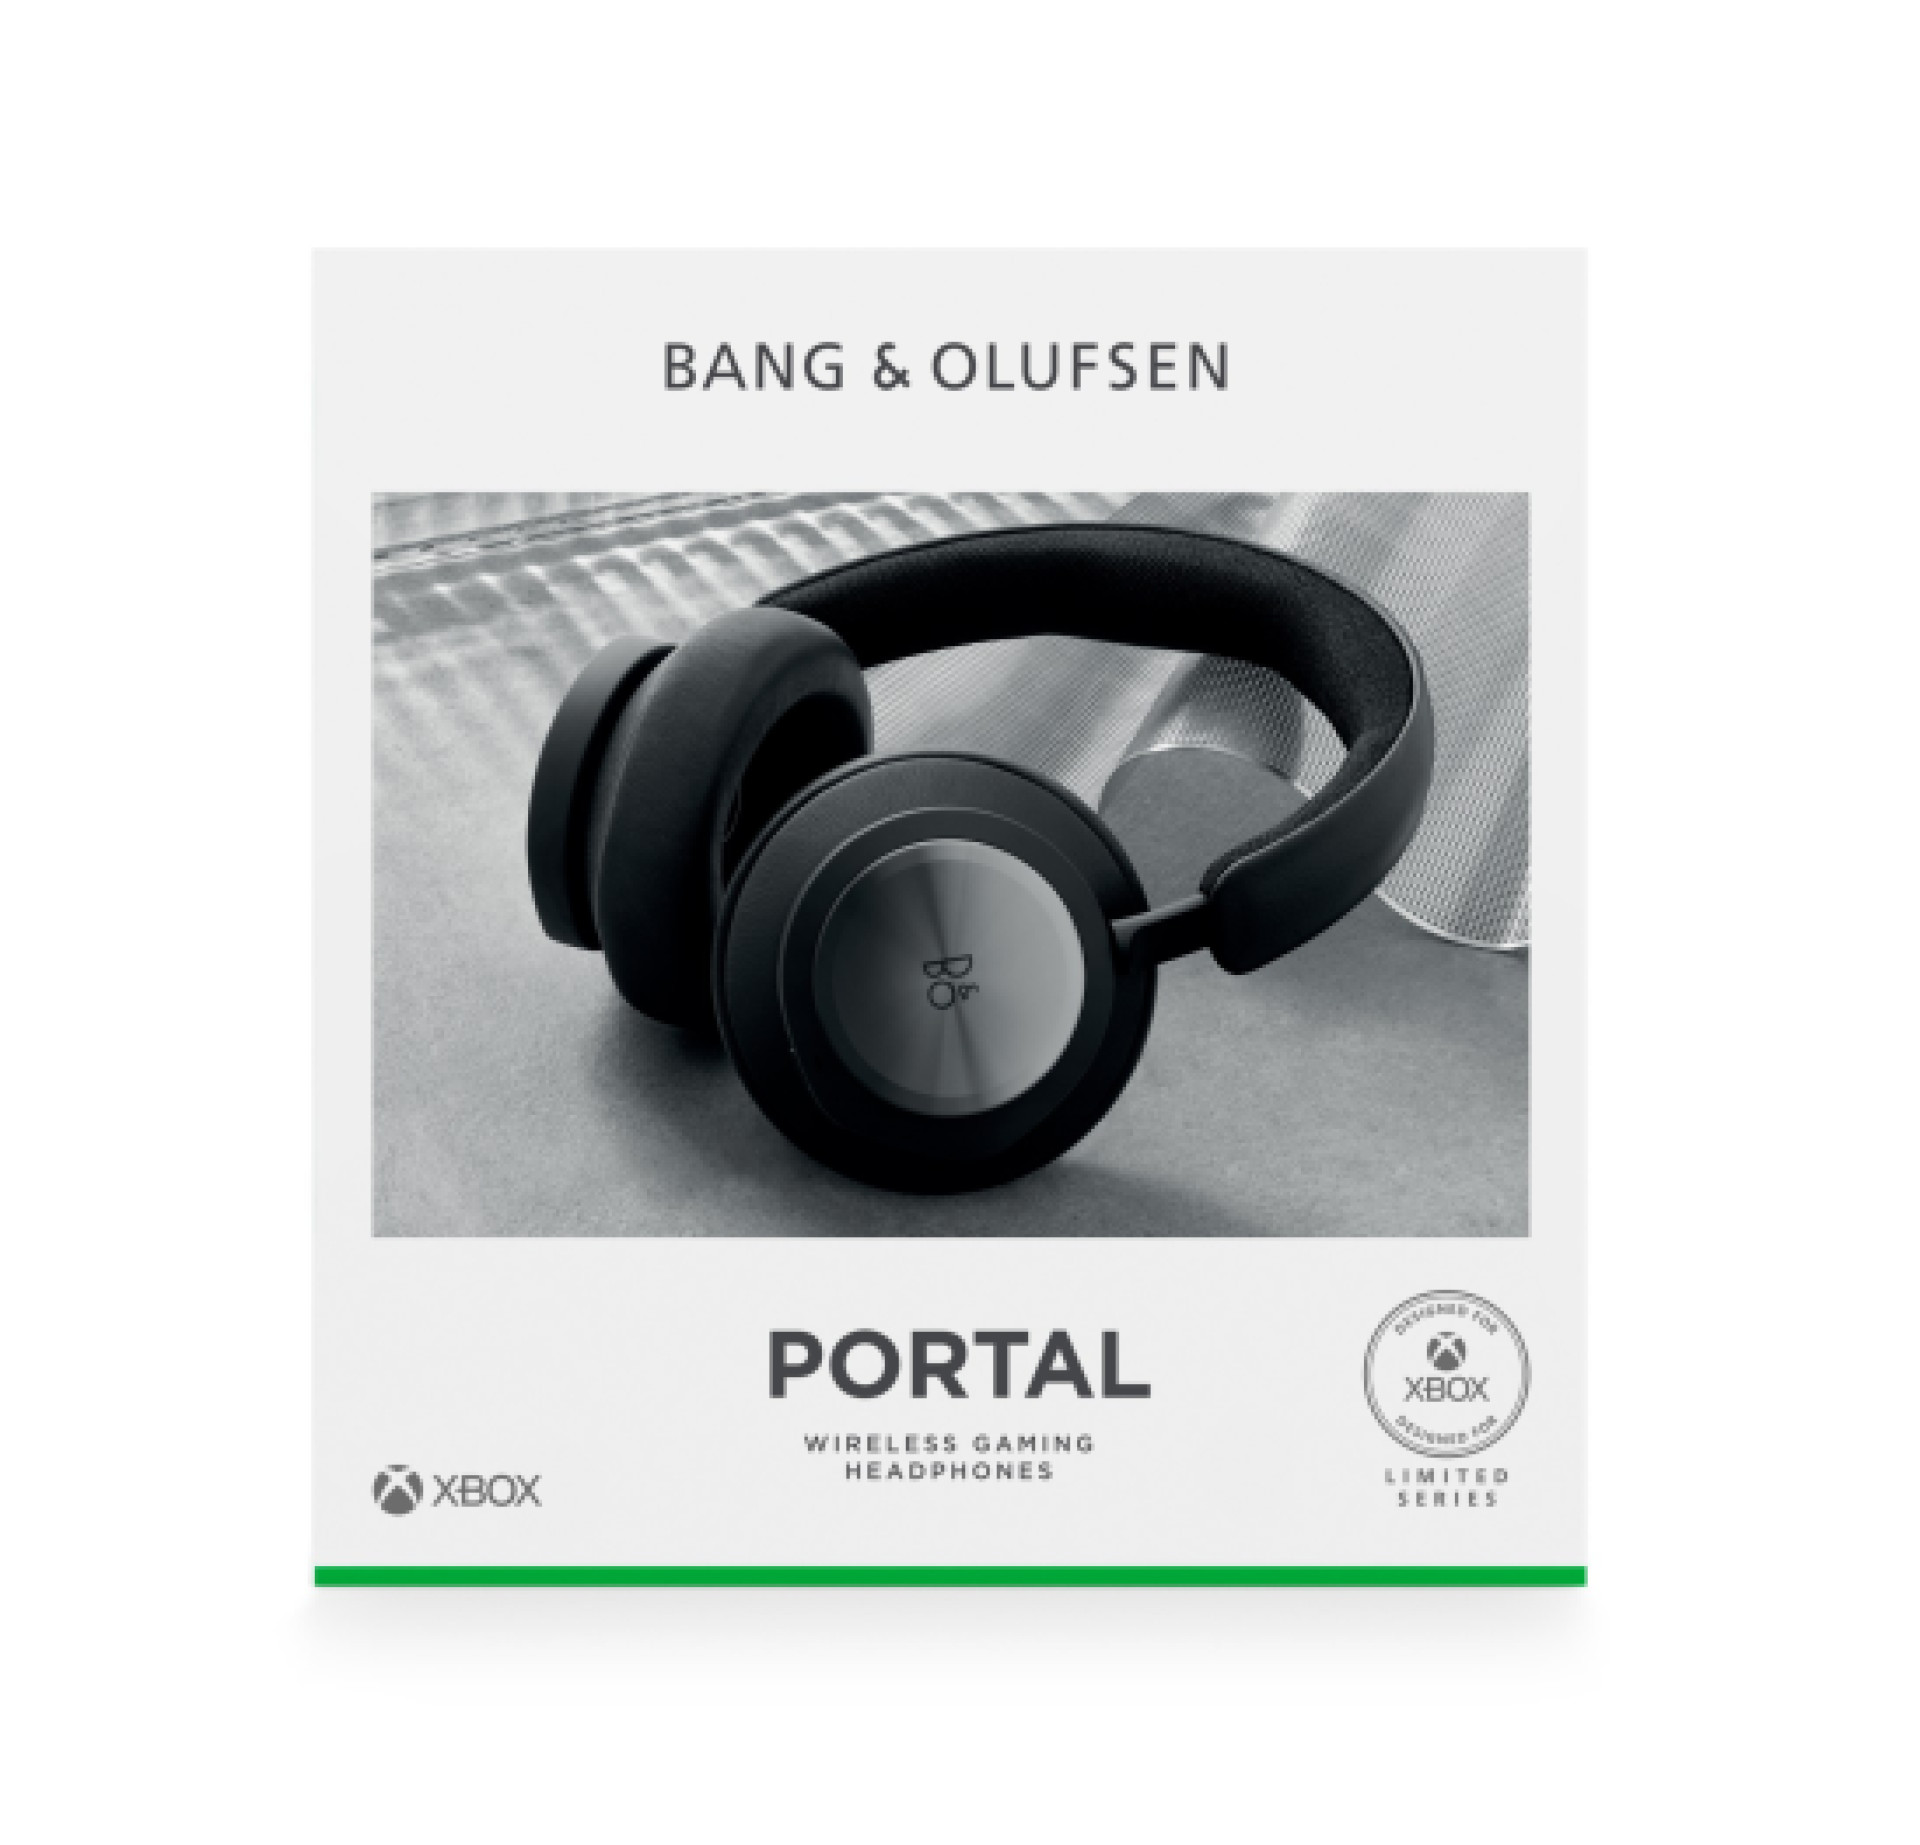 New Bang & Olufsen Beoplay Portal Wireless Headphones for Xbox Beoplay-Portal_Black_Packaging_Front_JPG.jpg